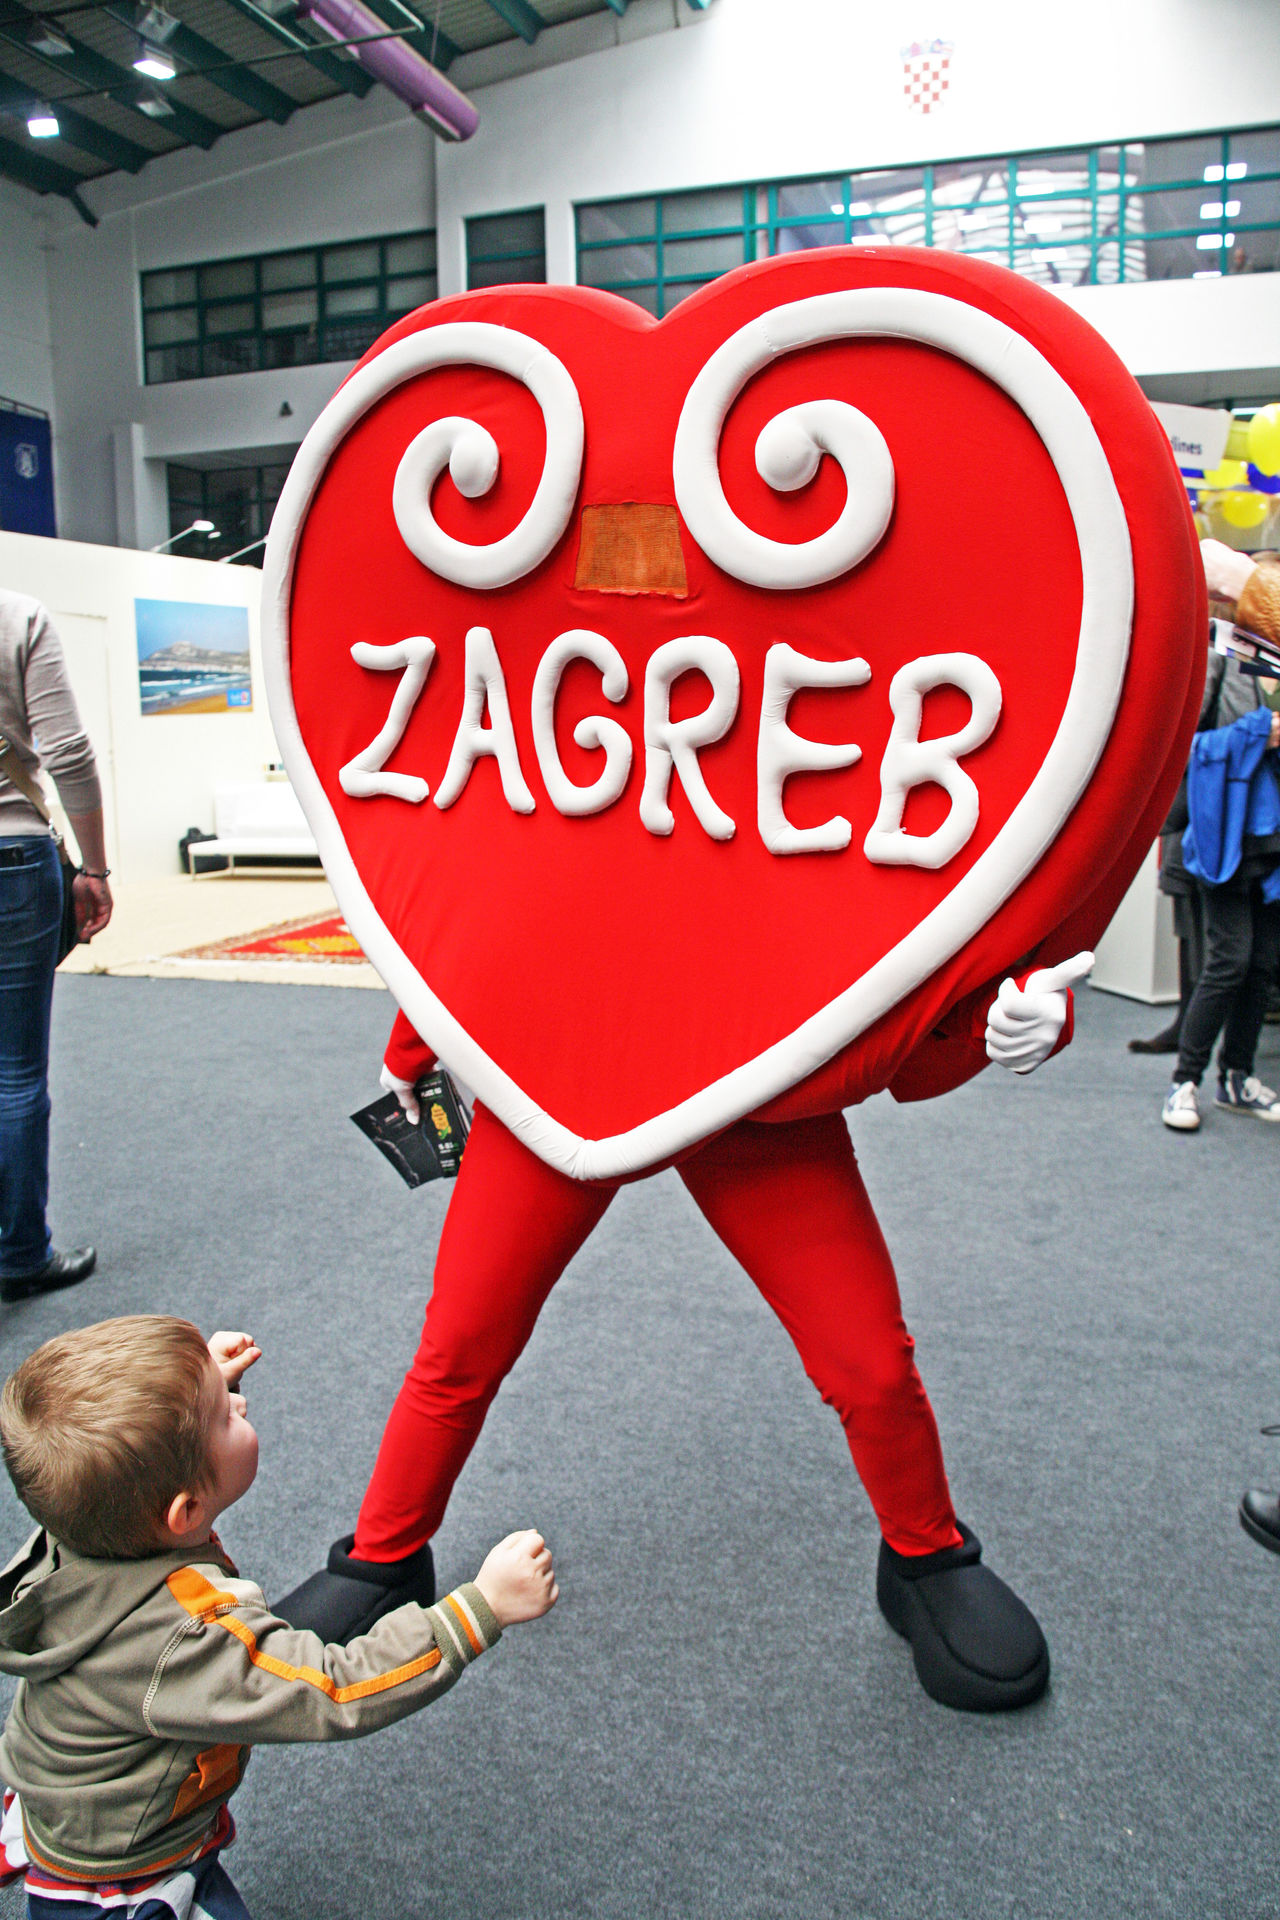 Zagreb's heart